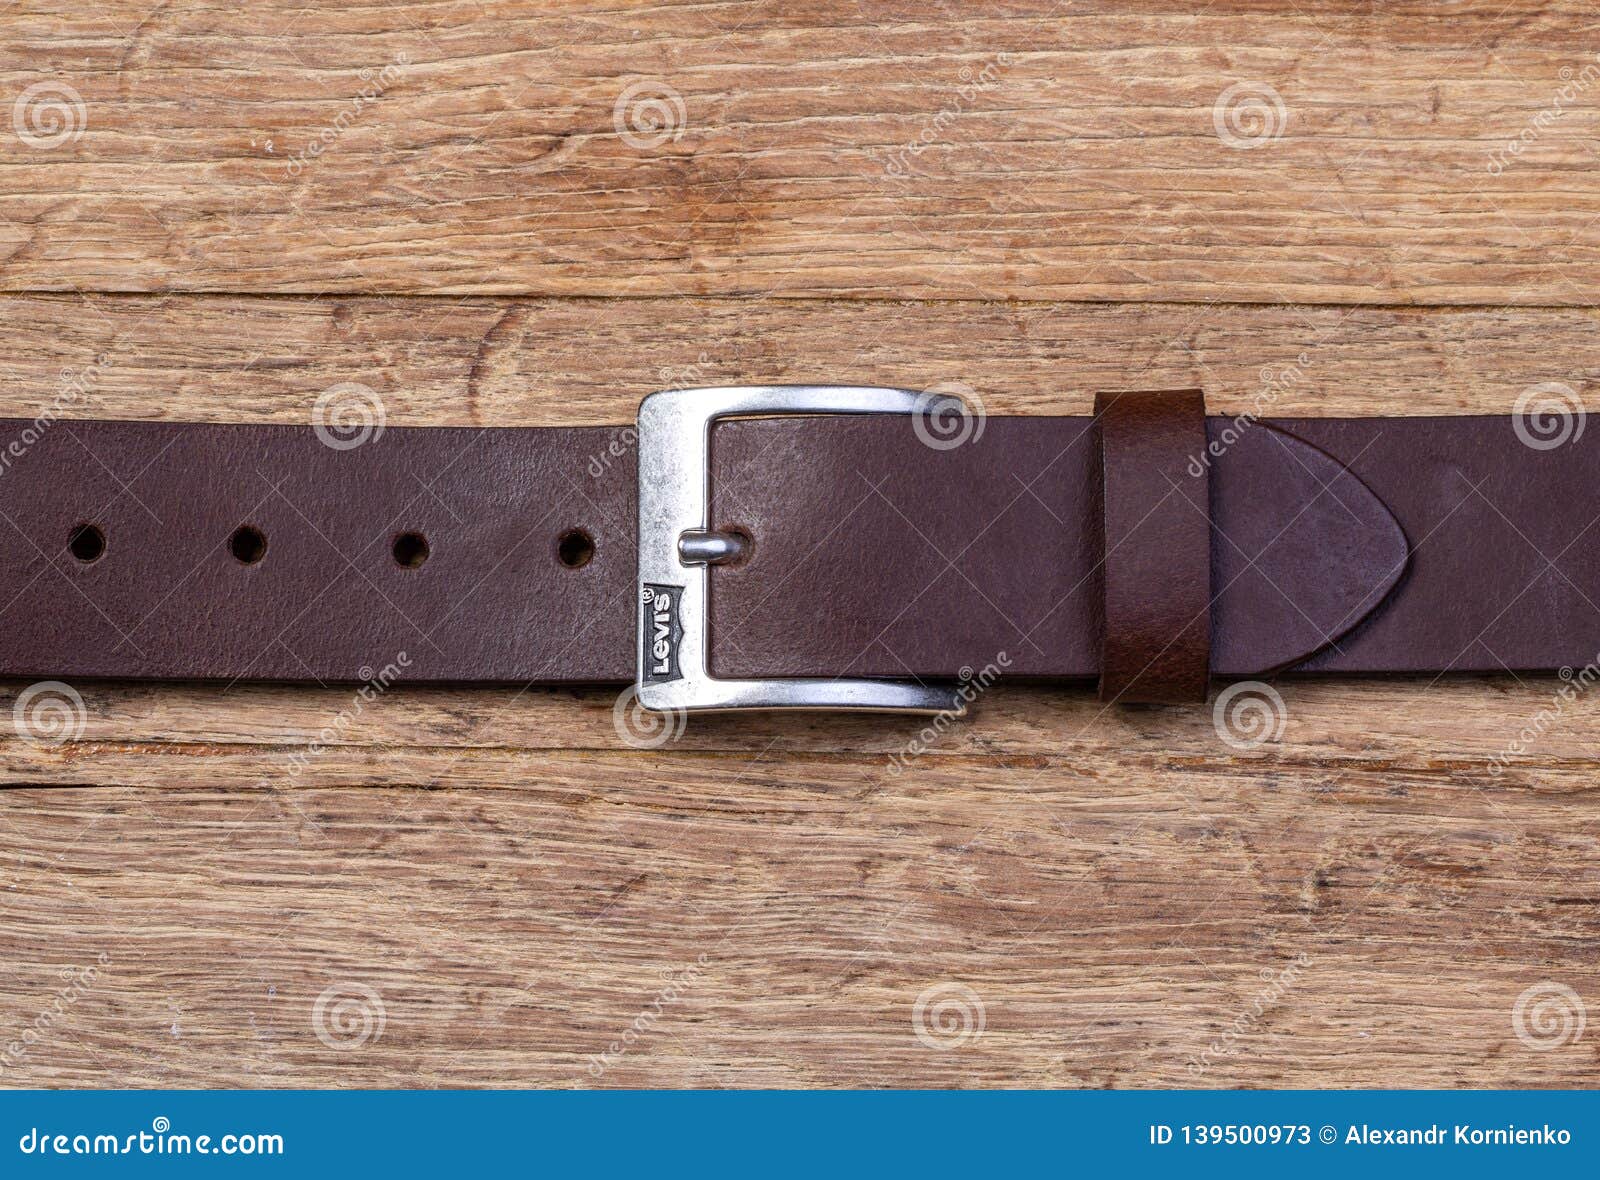 Leather belt Levis editorial stock photo. Image of belt - 139500973